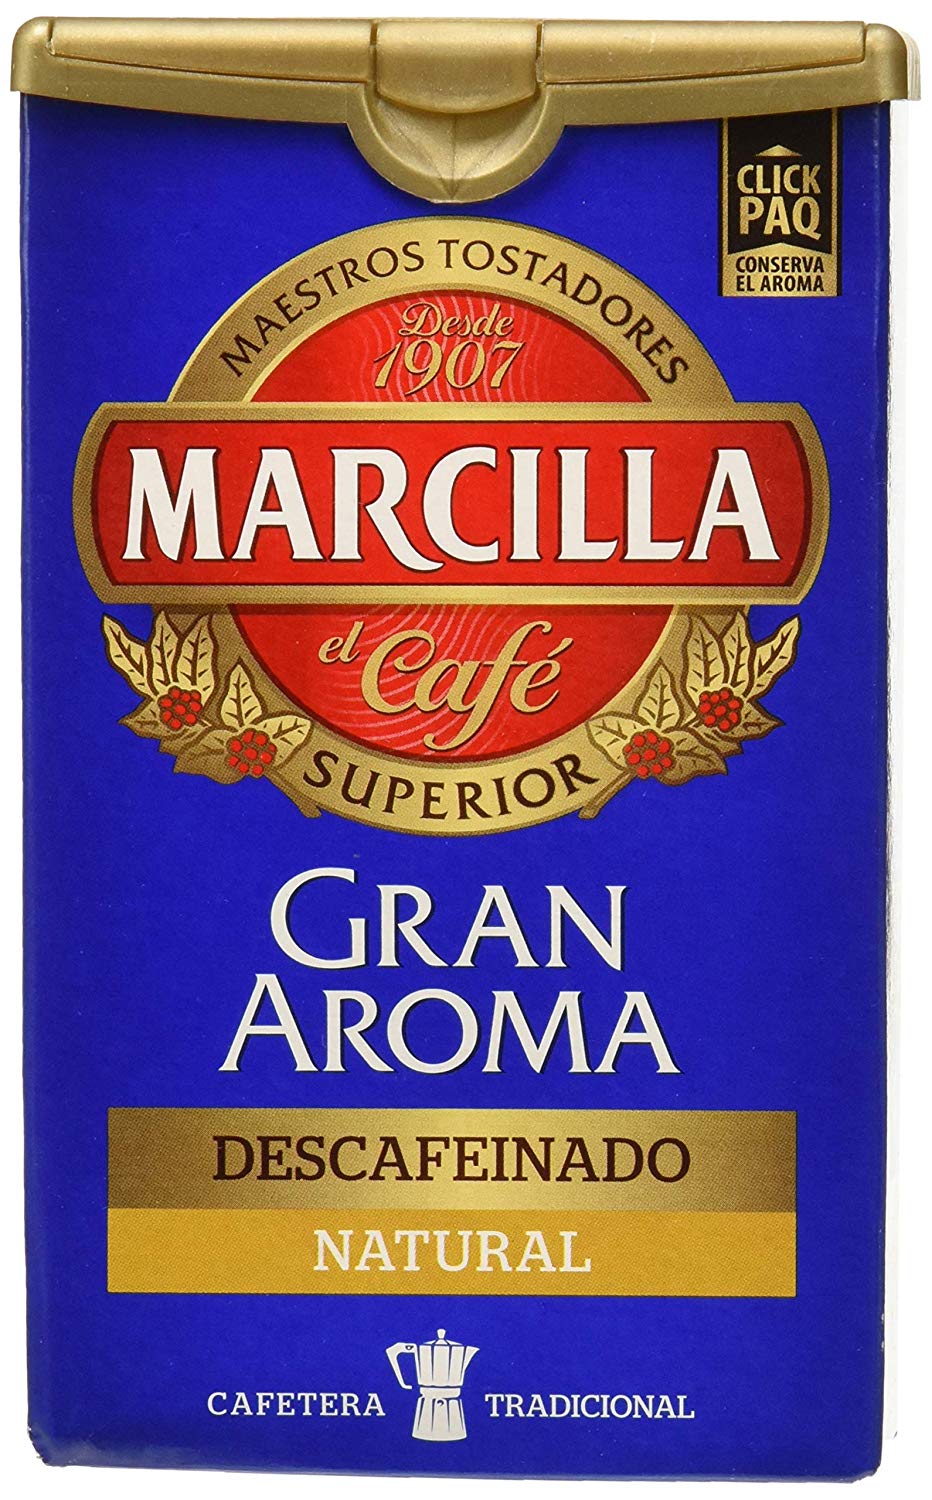 Marcilla café molido natural descafeinado solo 1,6€